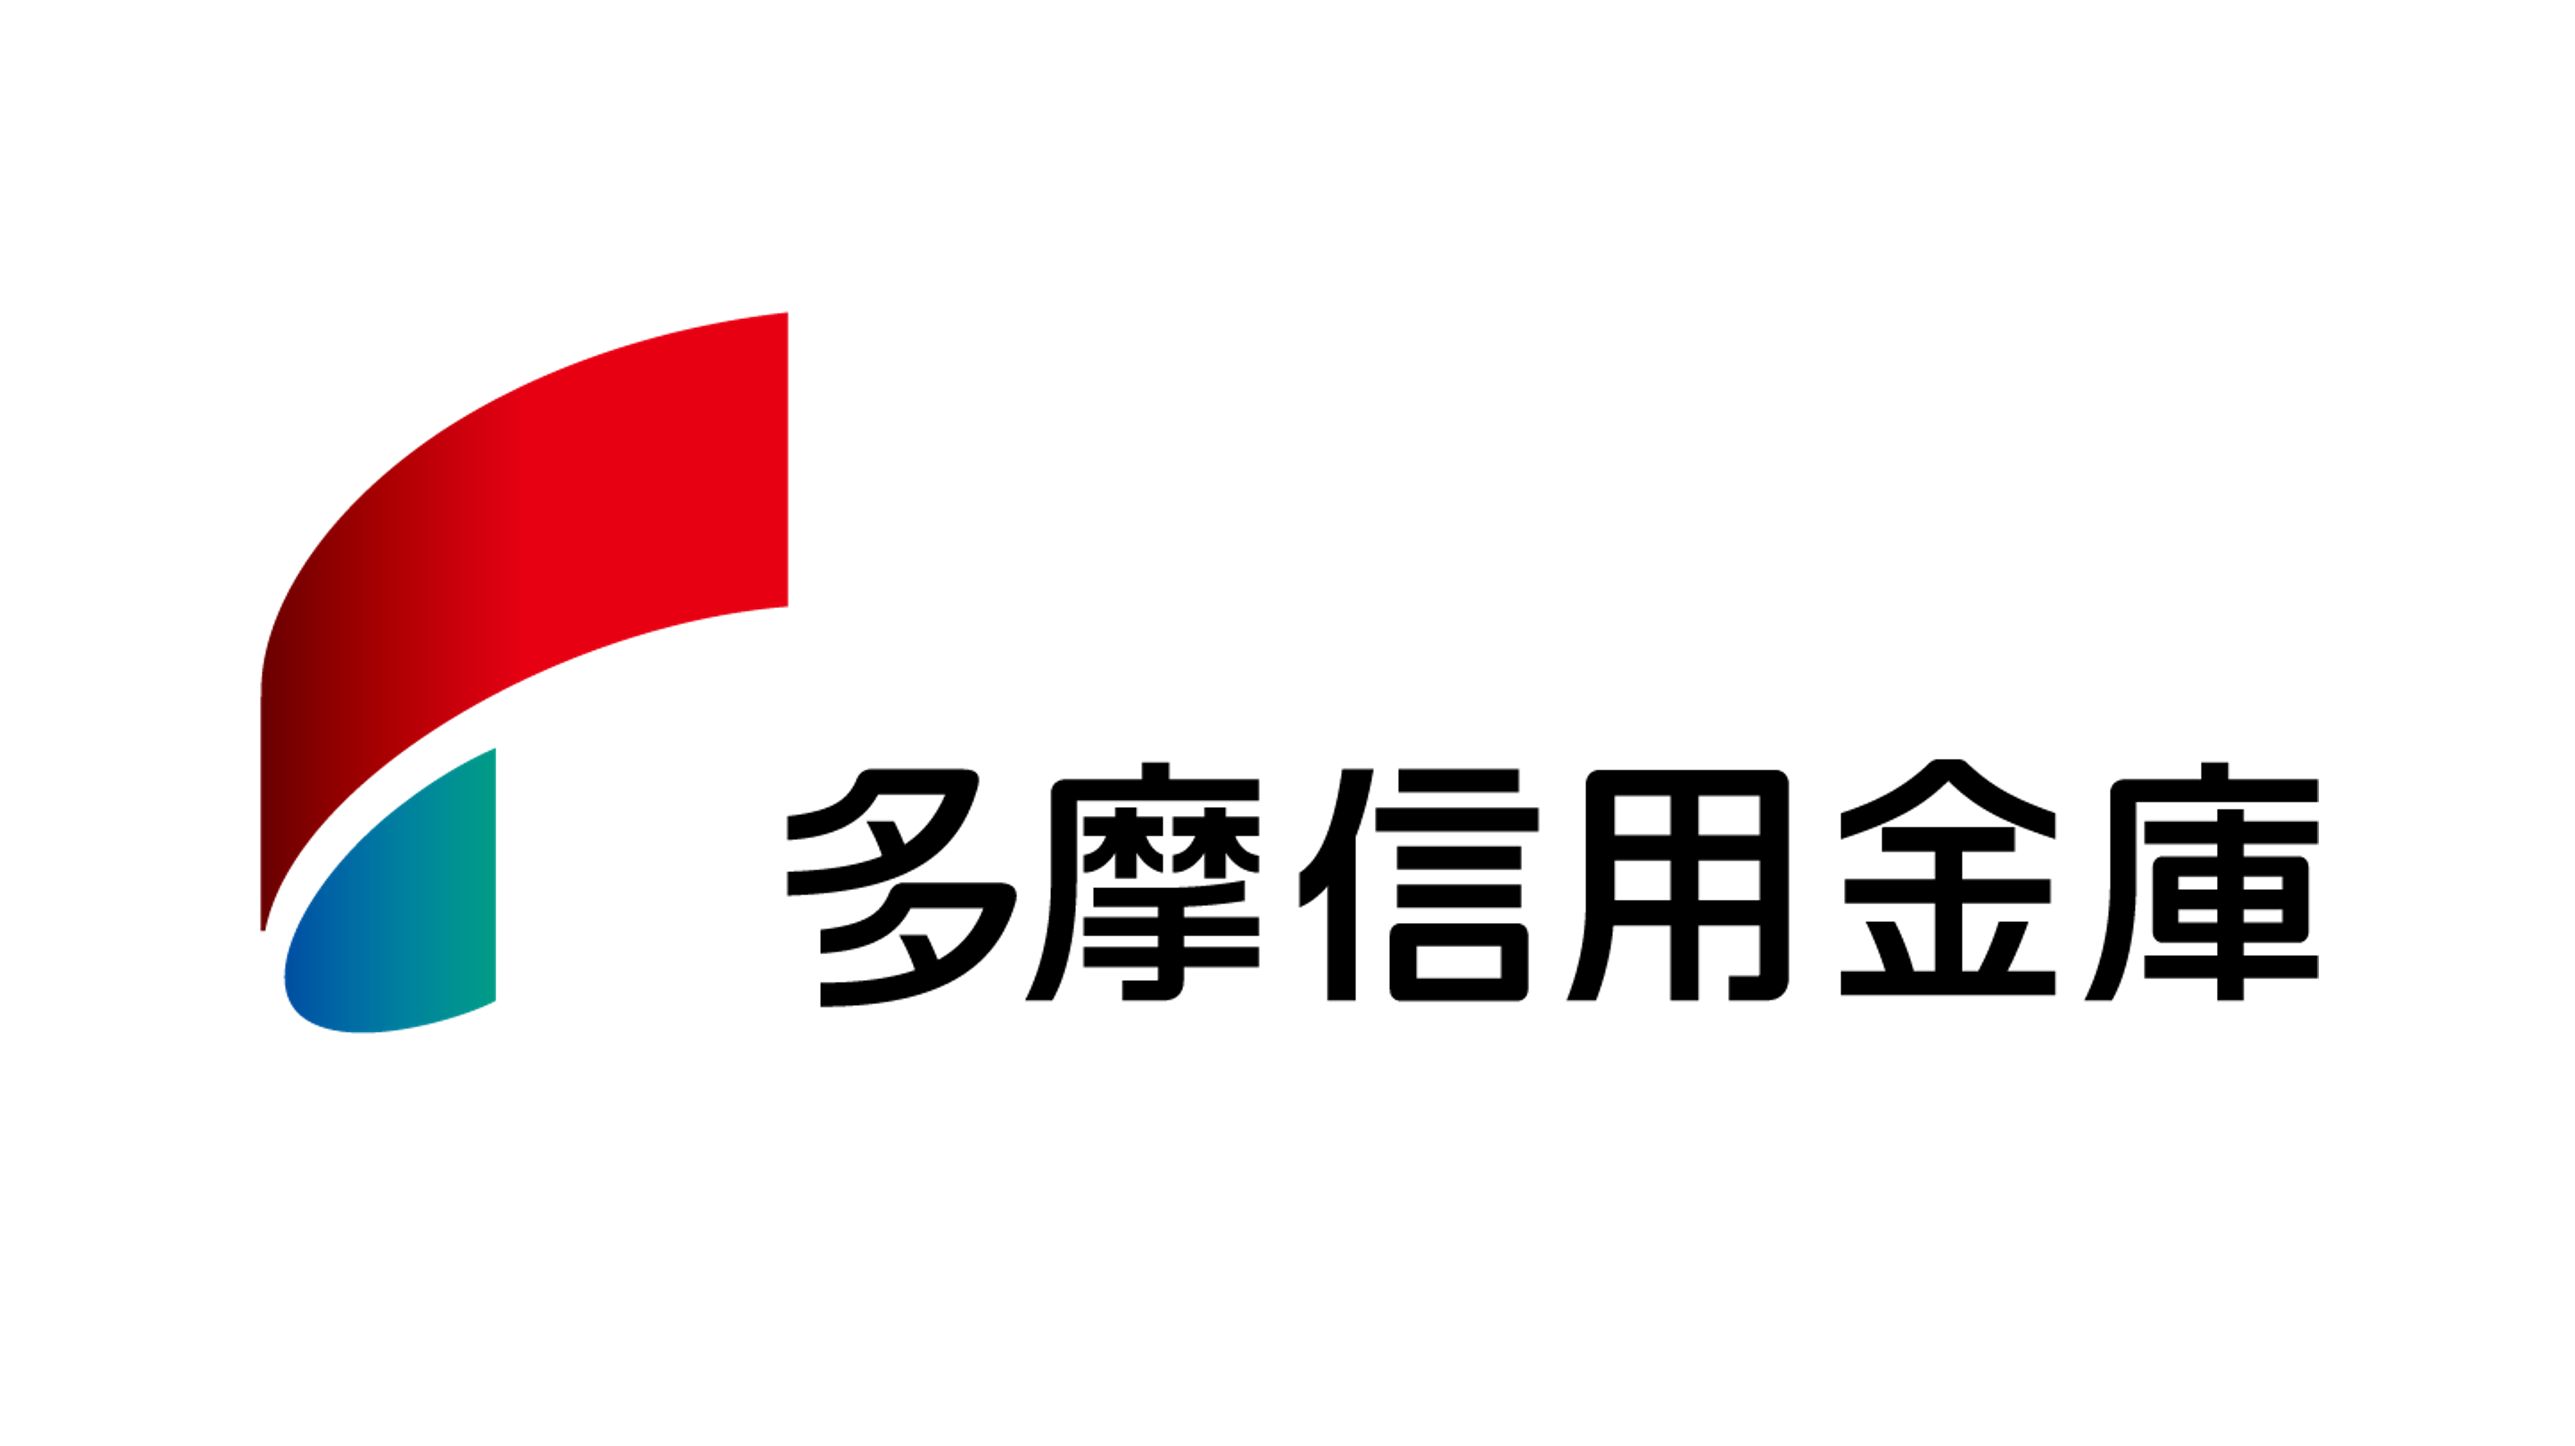 tamashin logo keisai 多摩信用金庫のDX専門人財育成<br>―DX University導入の舞台裏―